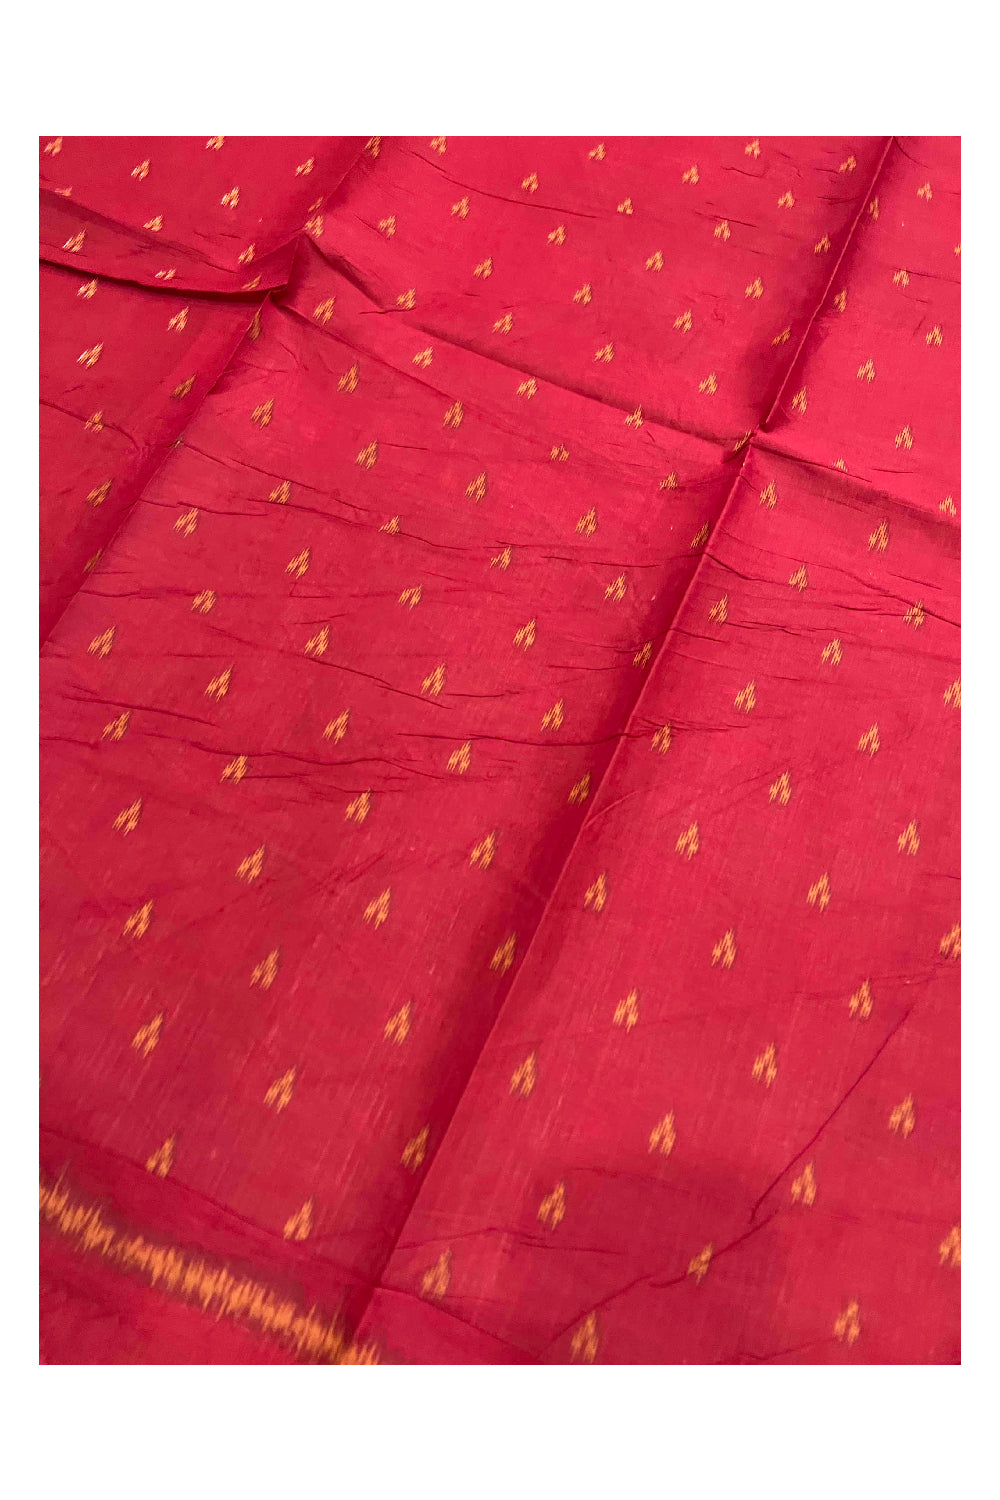 Southloom Jaipur Cotton Printed Light Brown Designer Saree